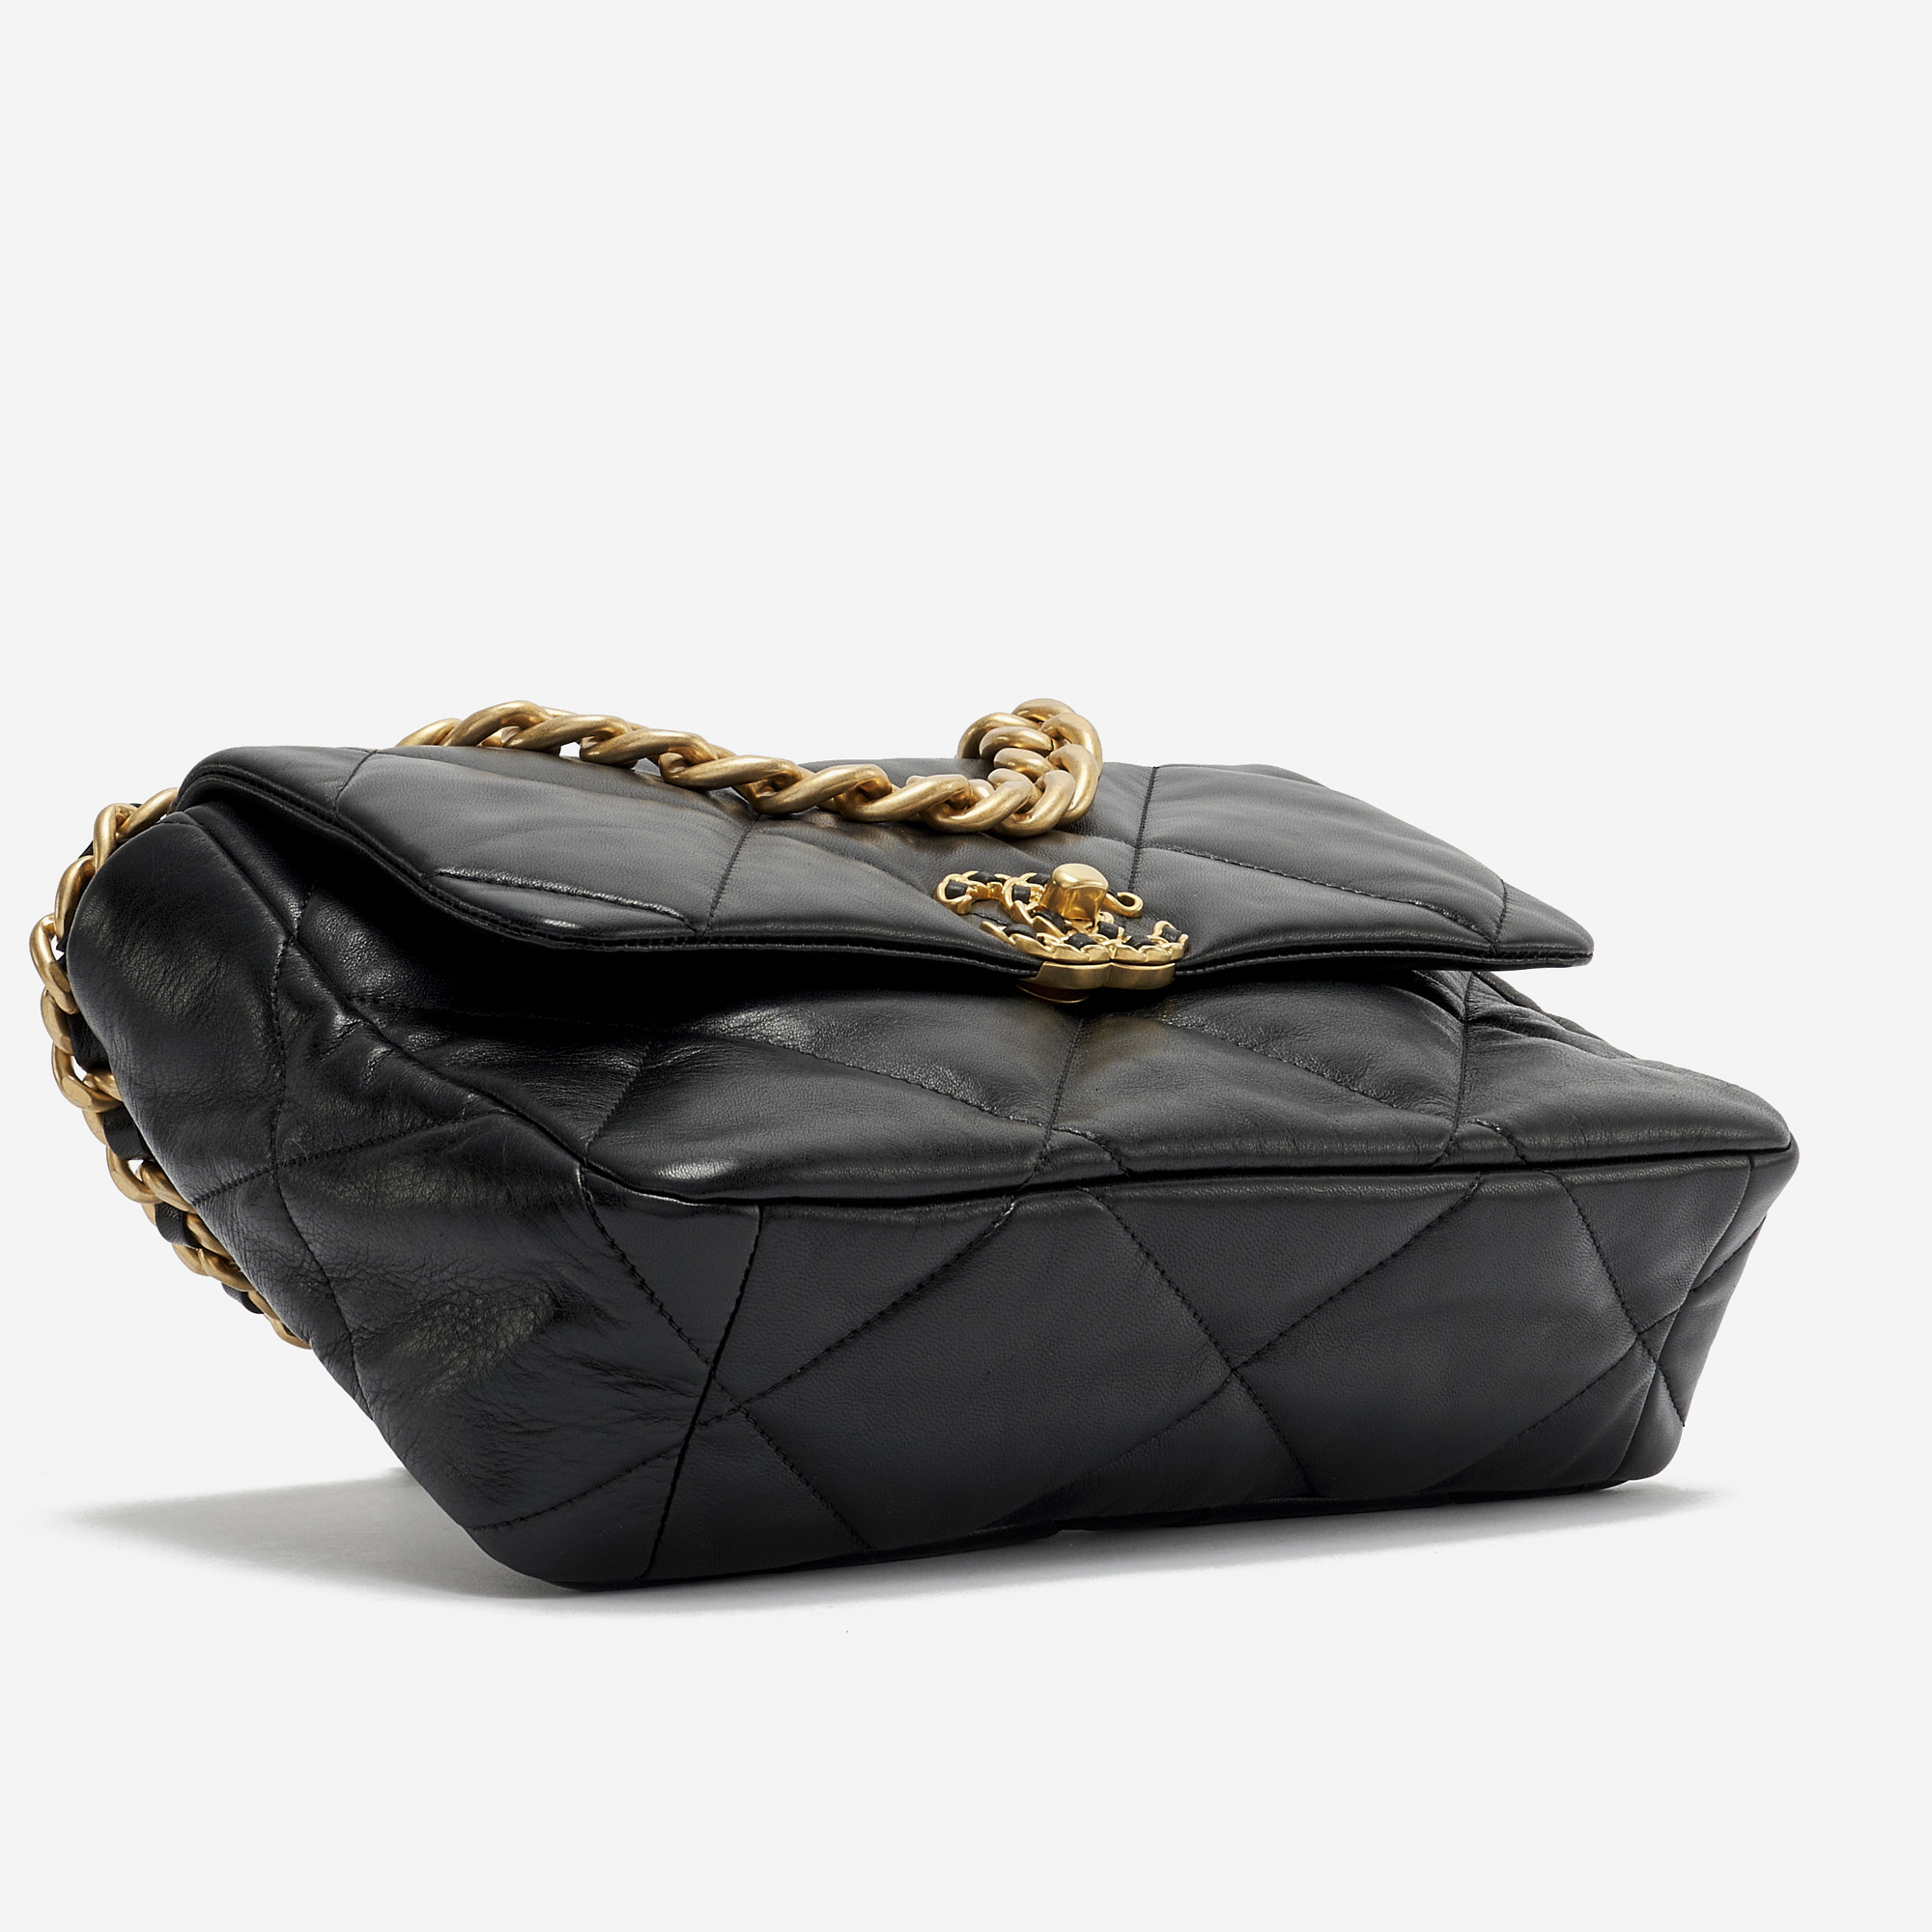 Chanel 19 leather handbag Chanel Black in Leather - 18344364